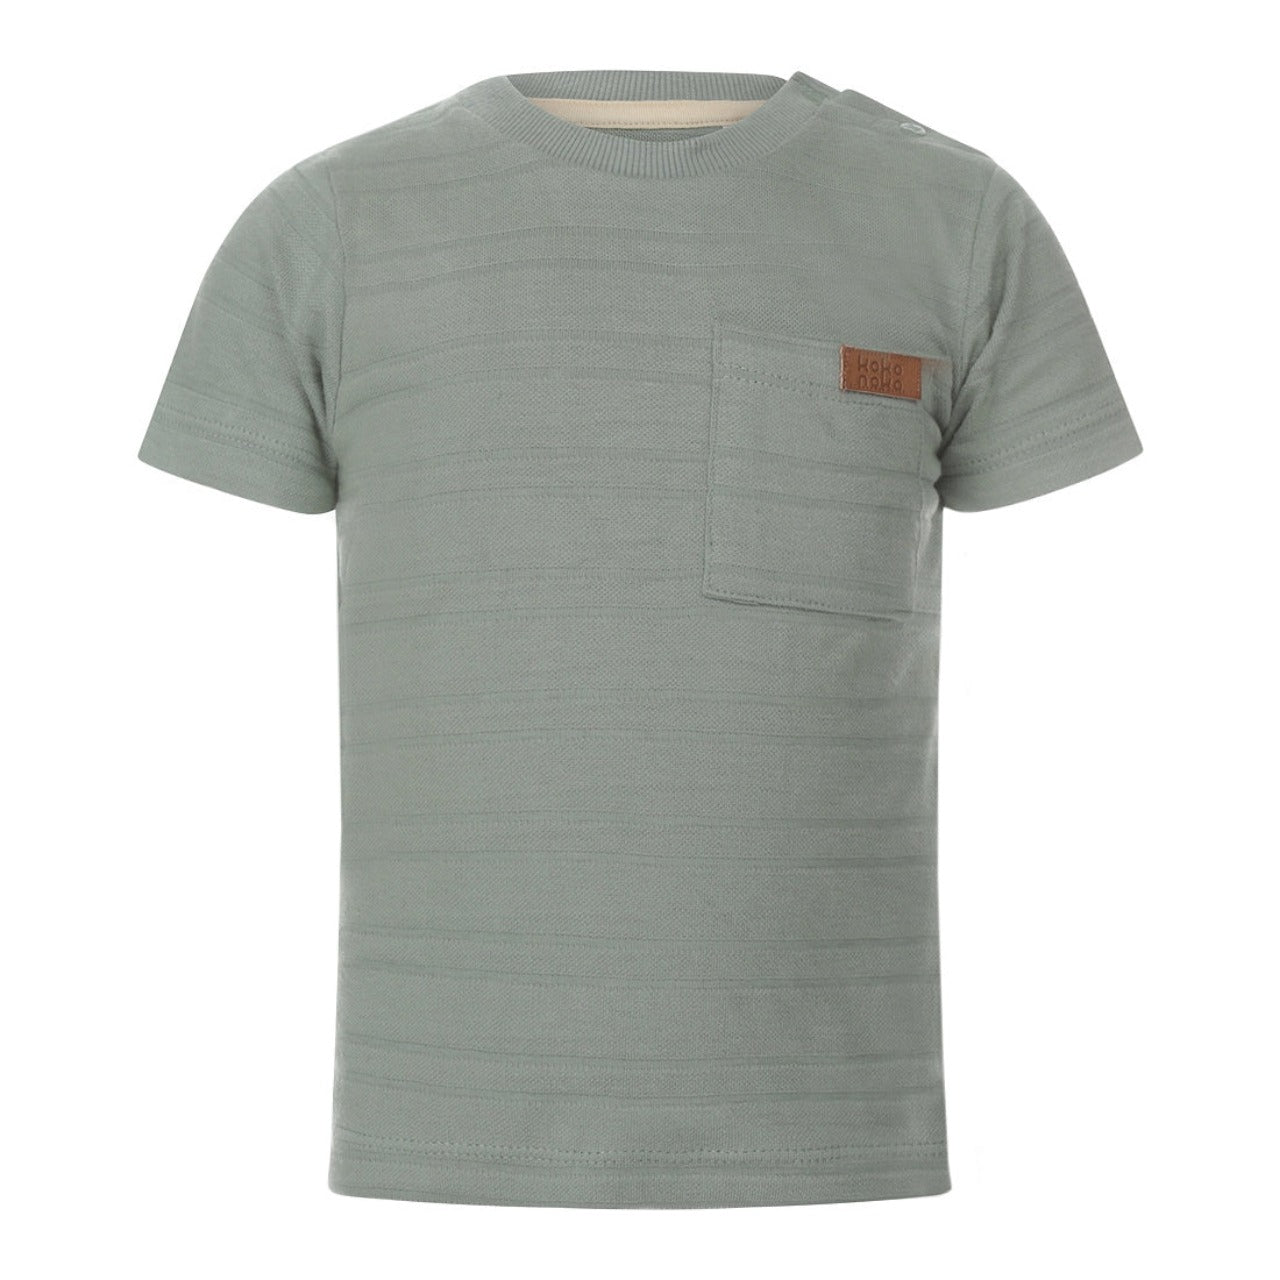 T-shirt Dusty Green met streep patroon